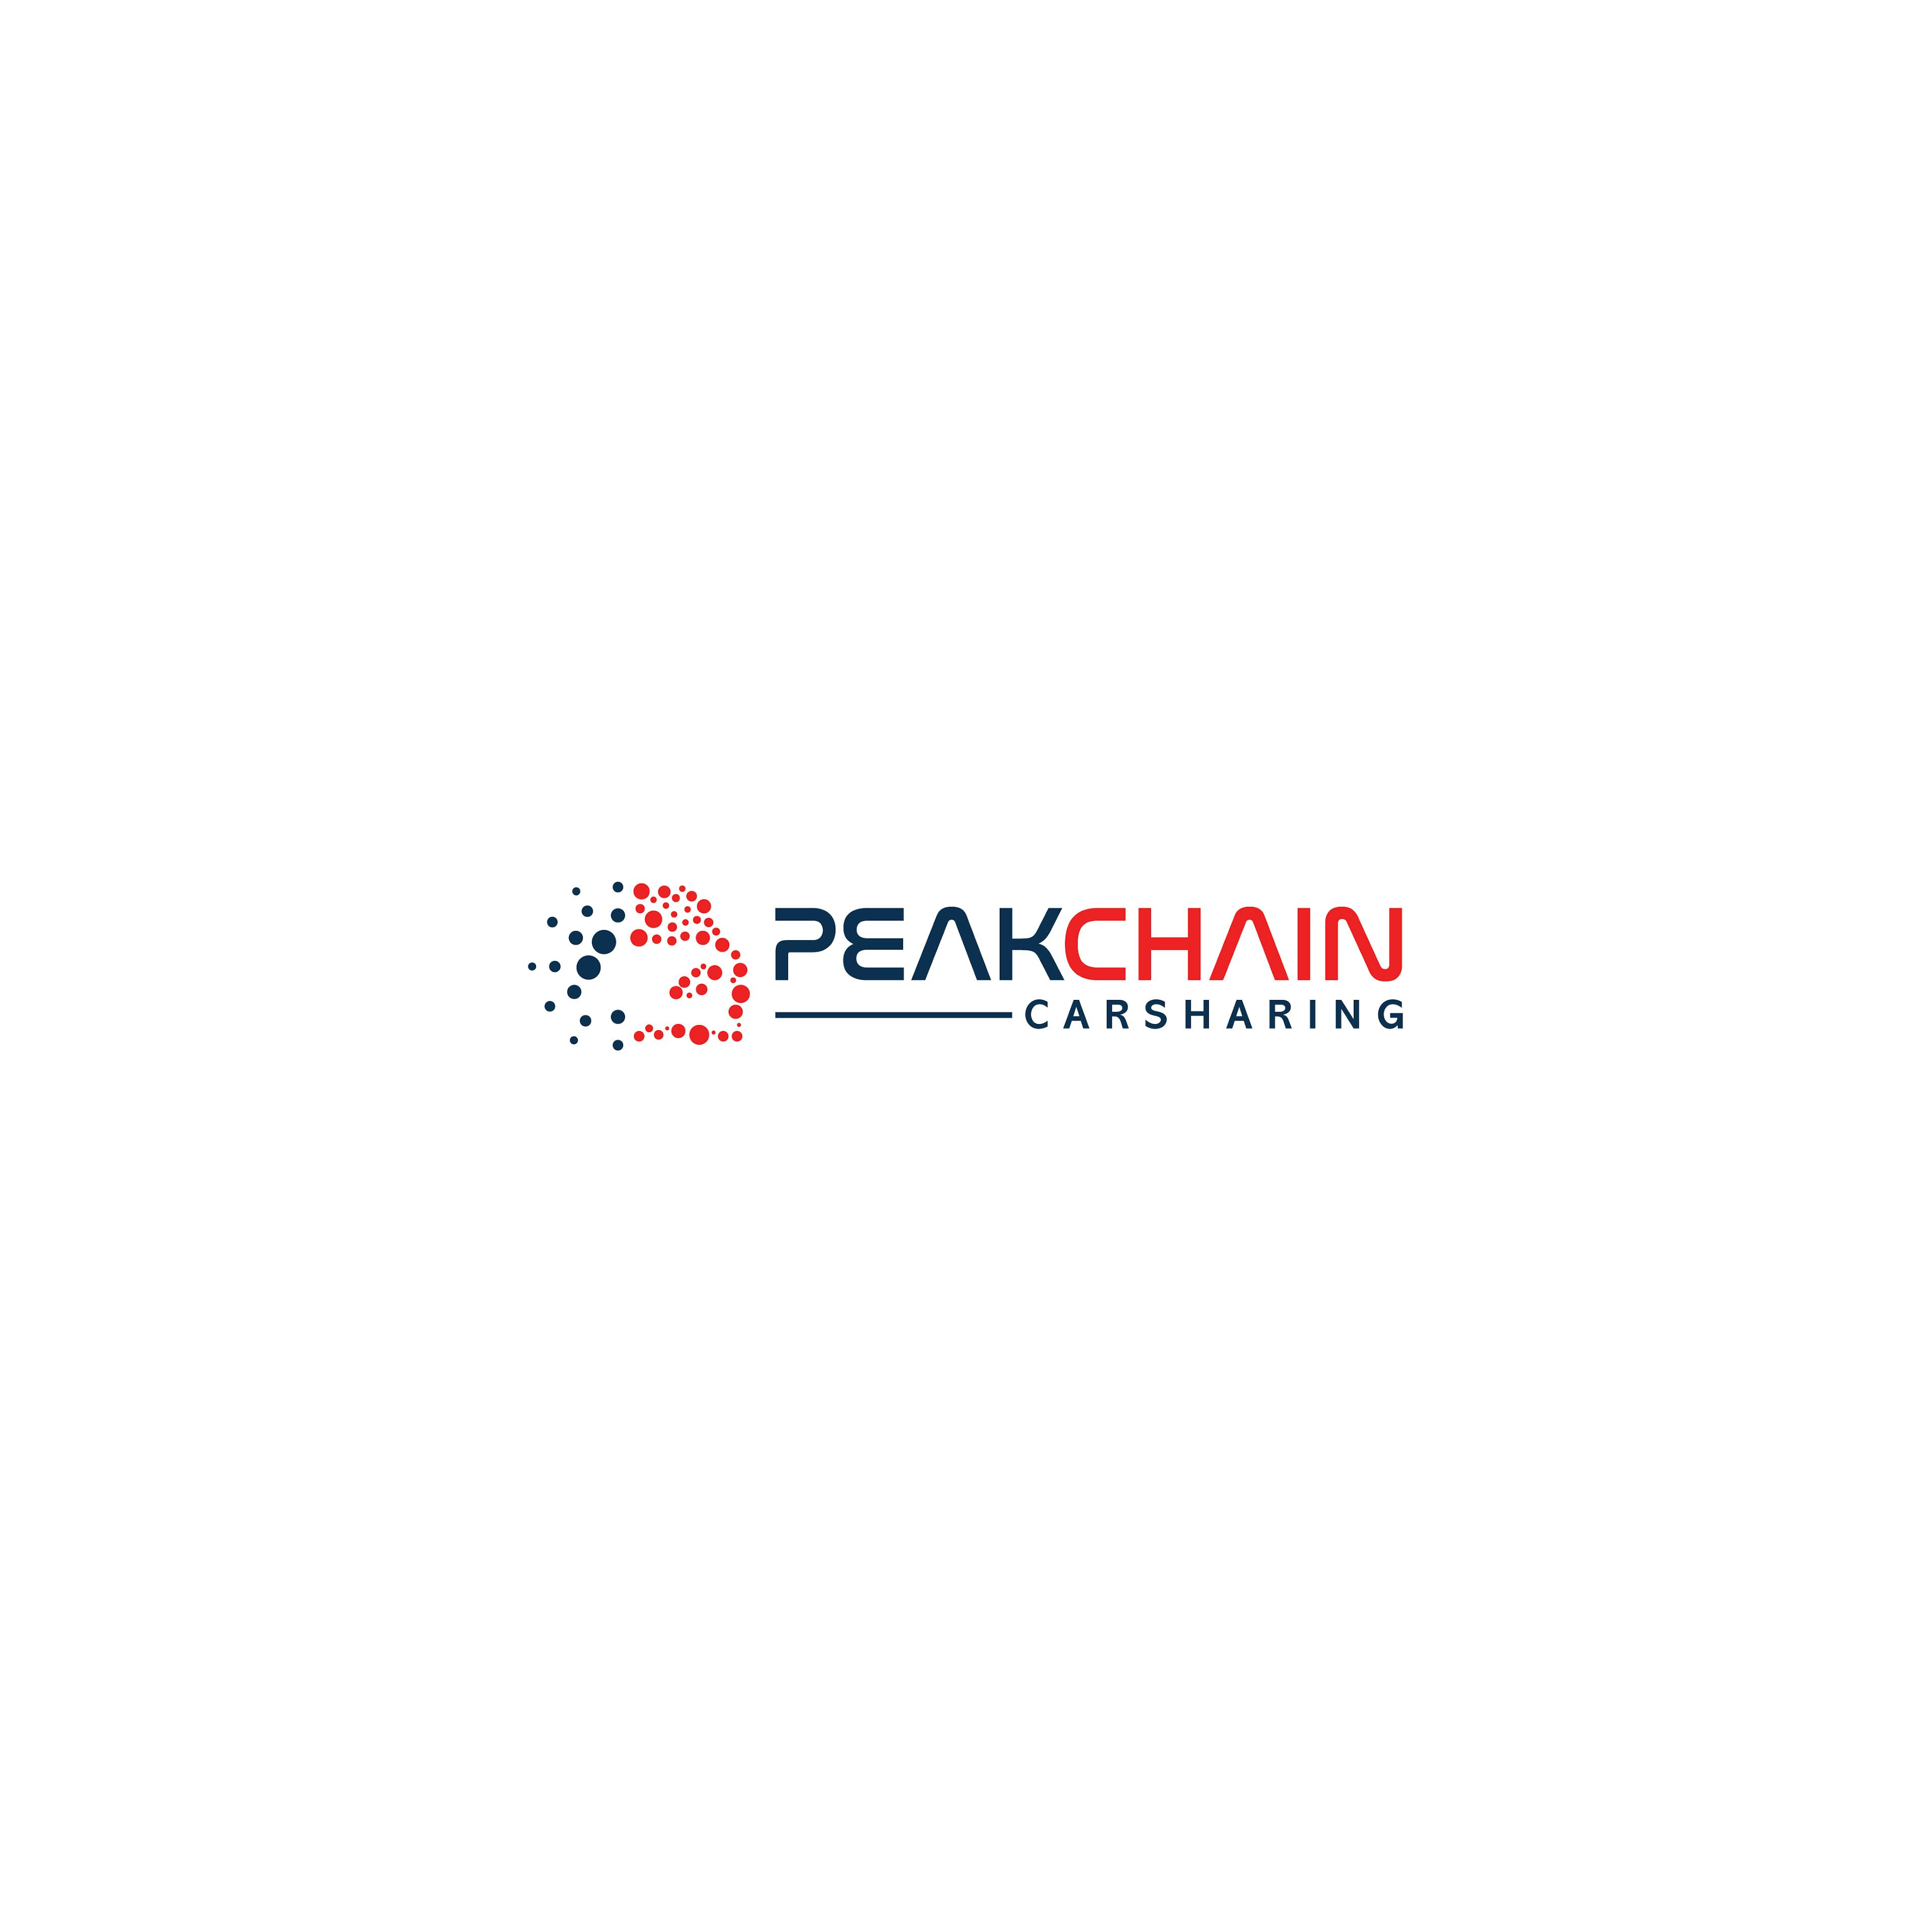 PeakChain Car-Sharing Platform on Cardano Blockchain